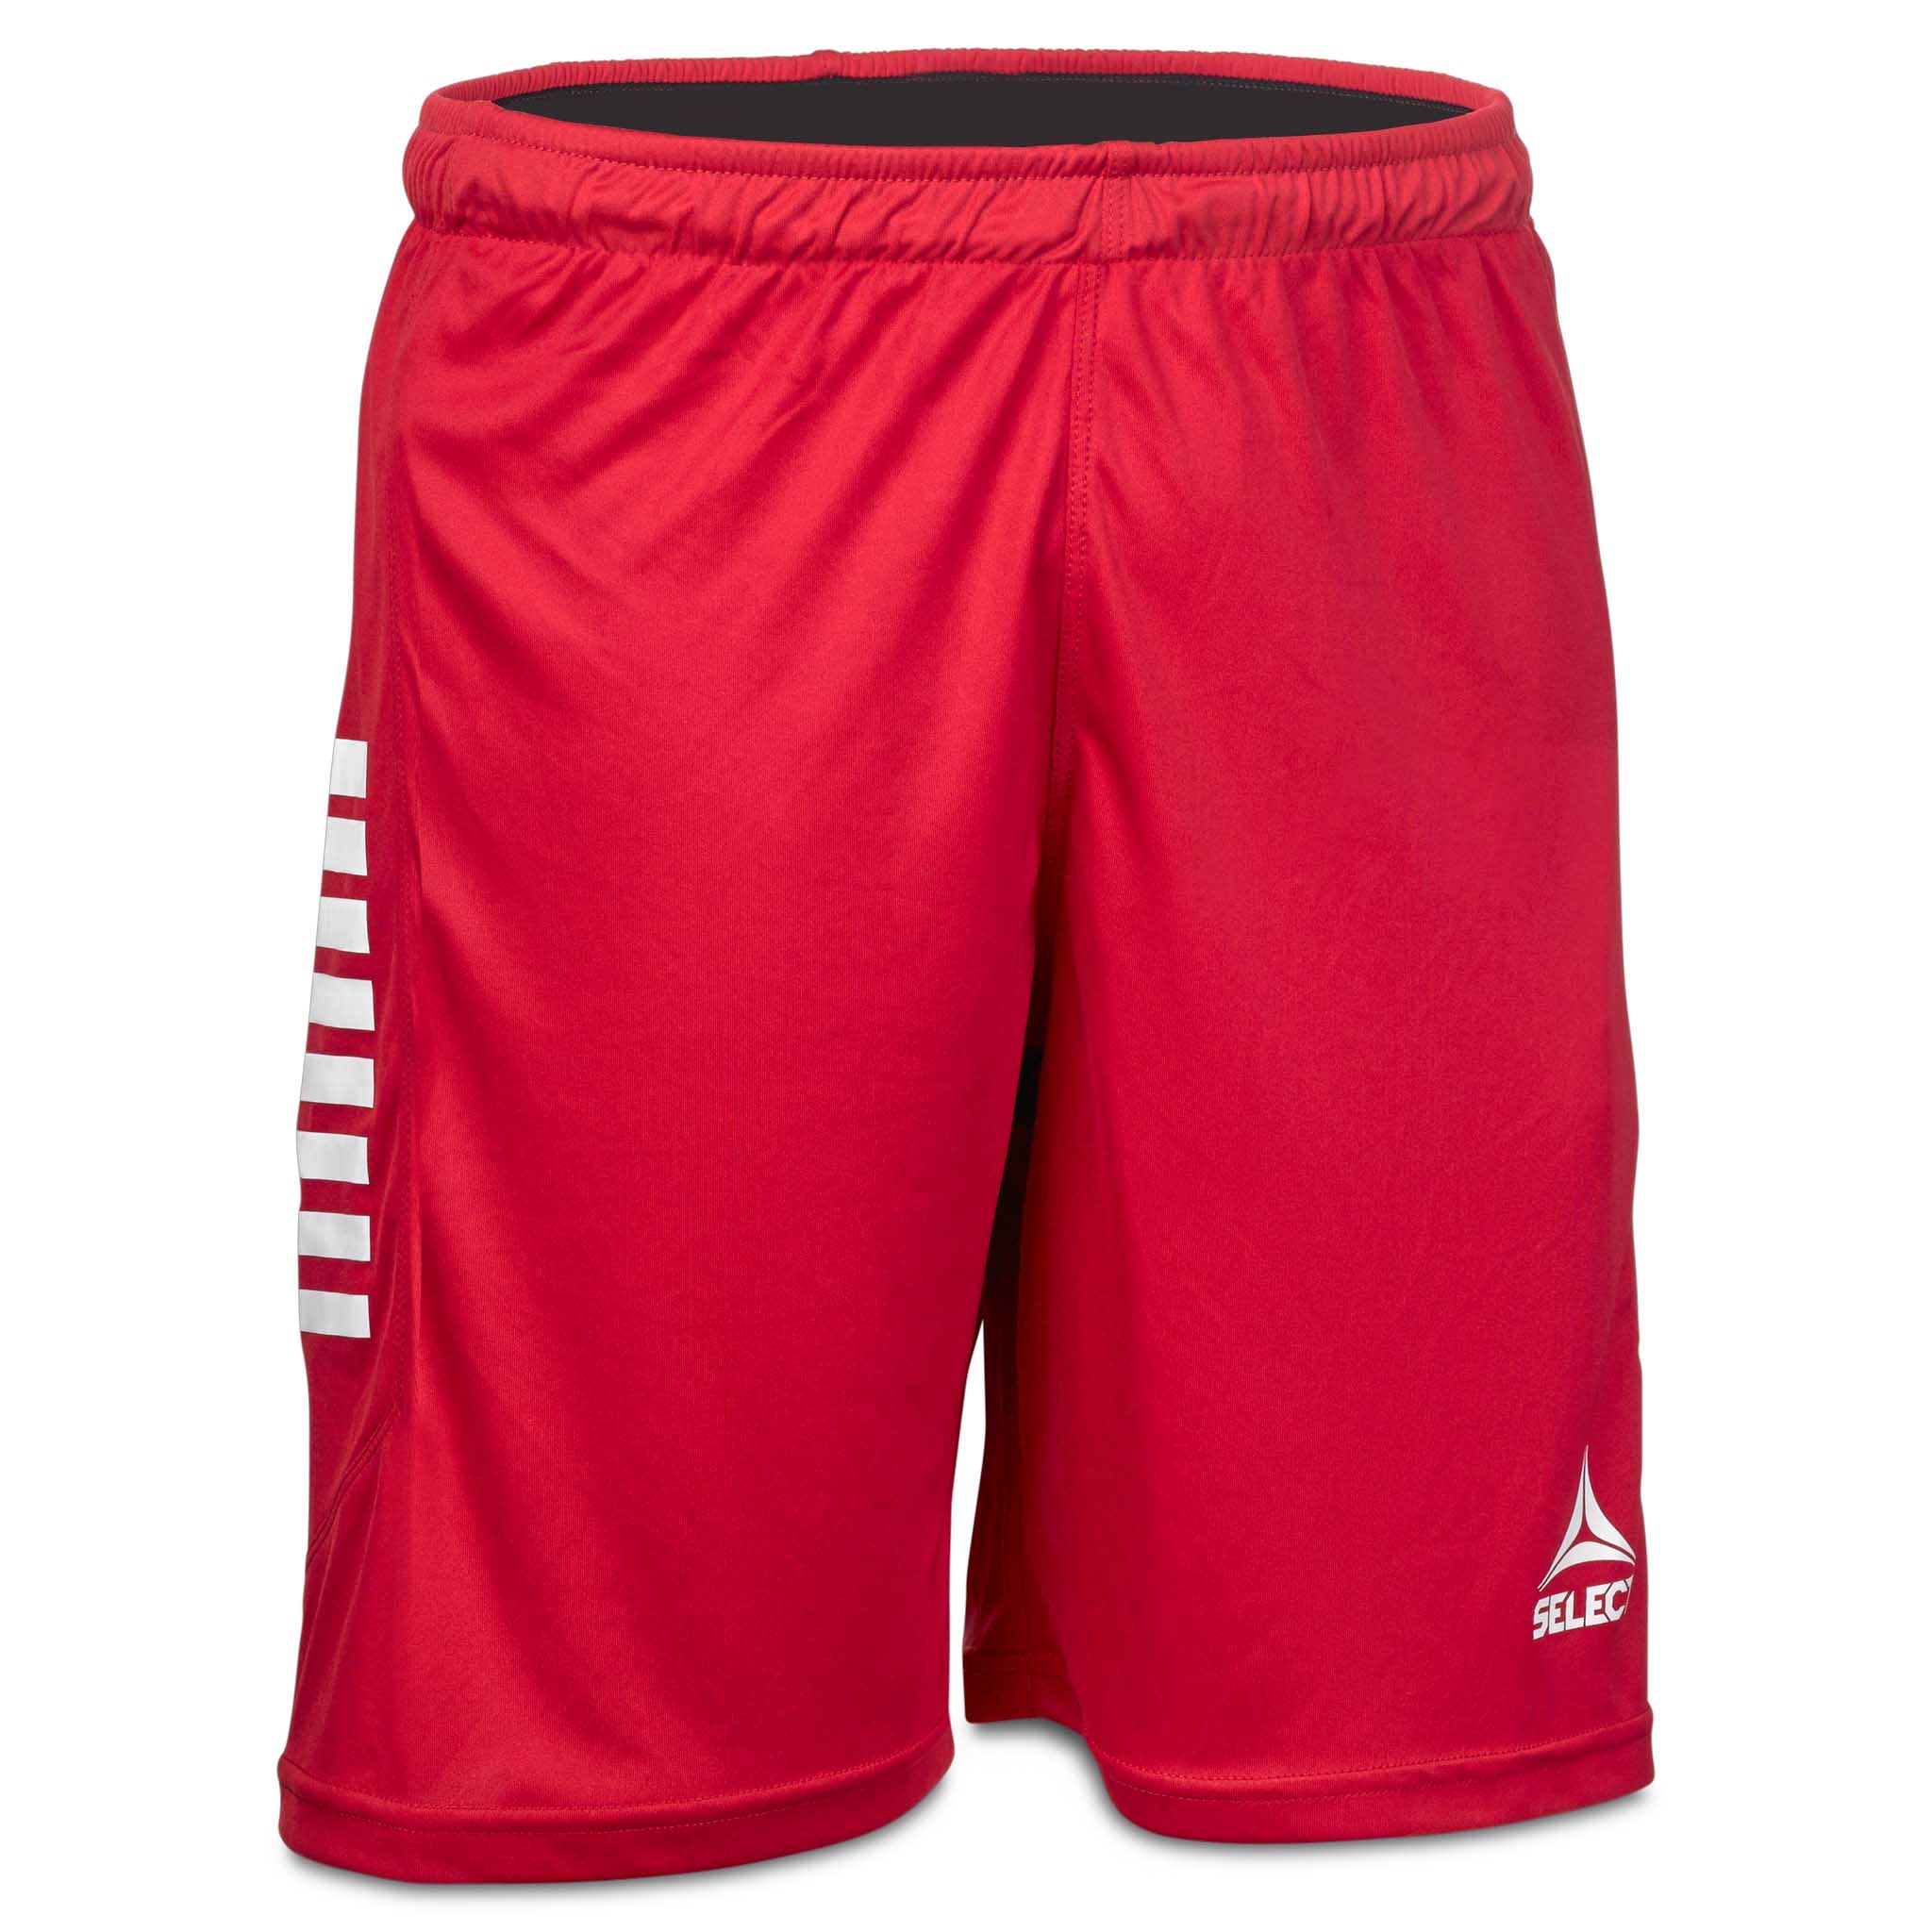 Monaco shorts #farve_rød/hvid